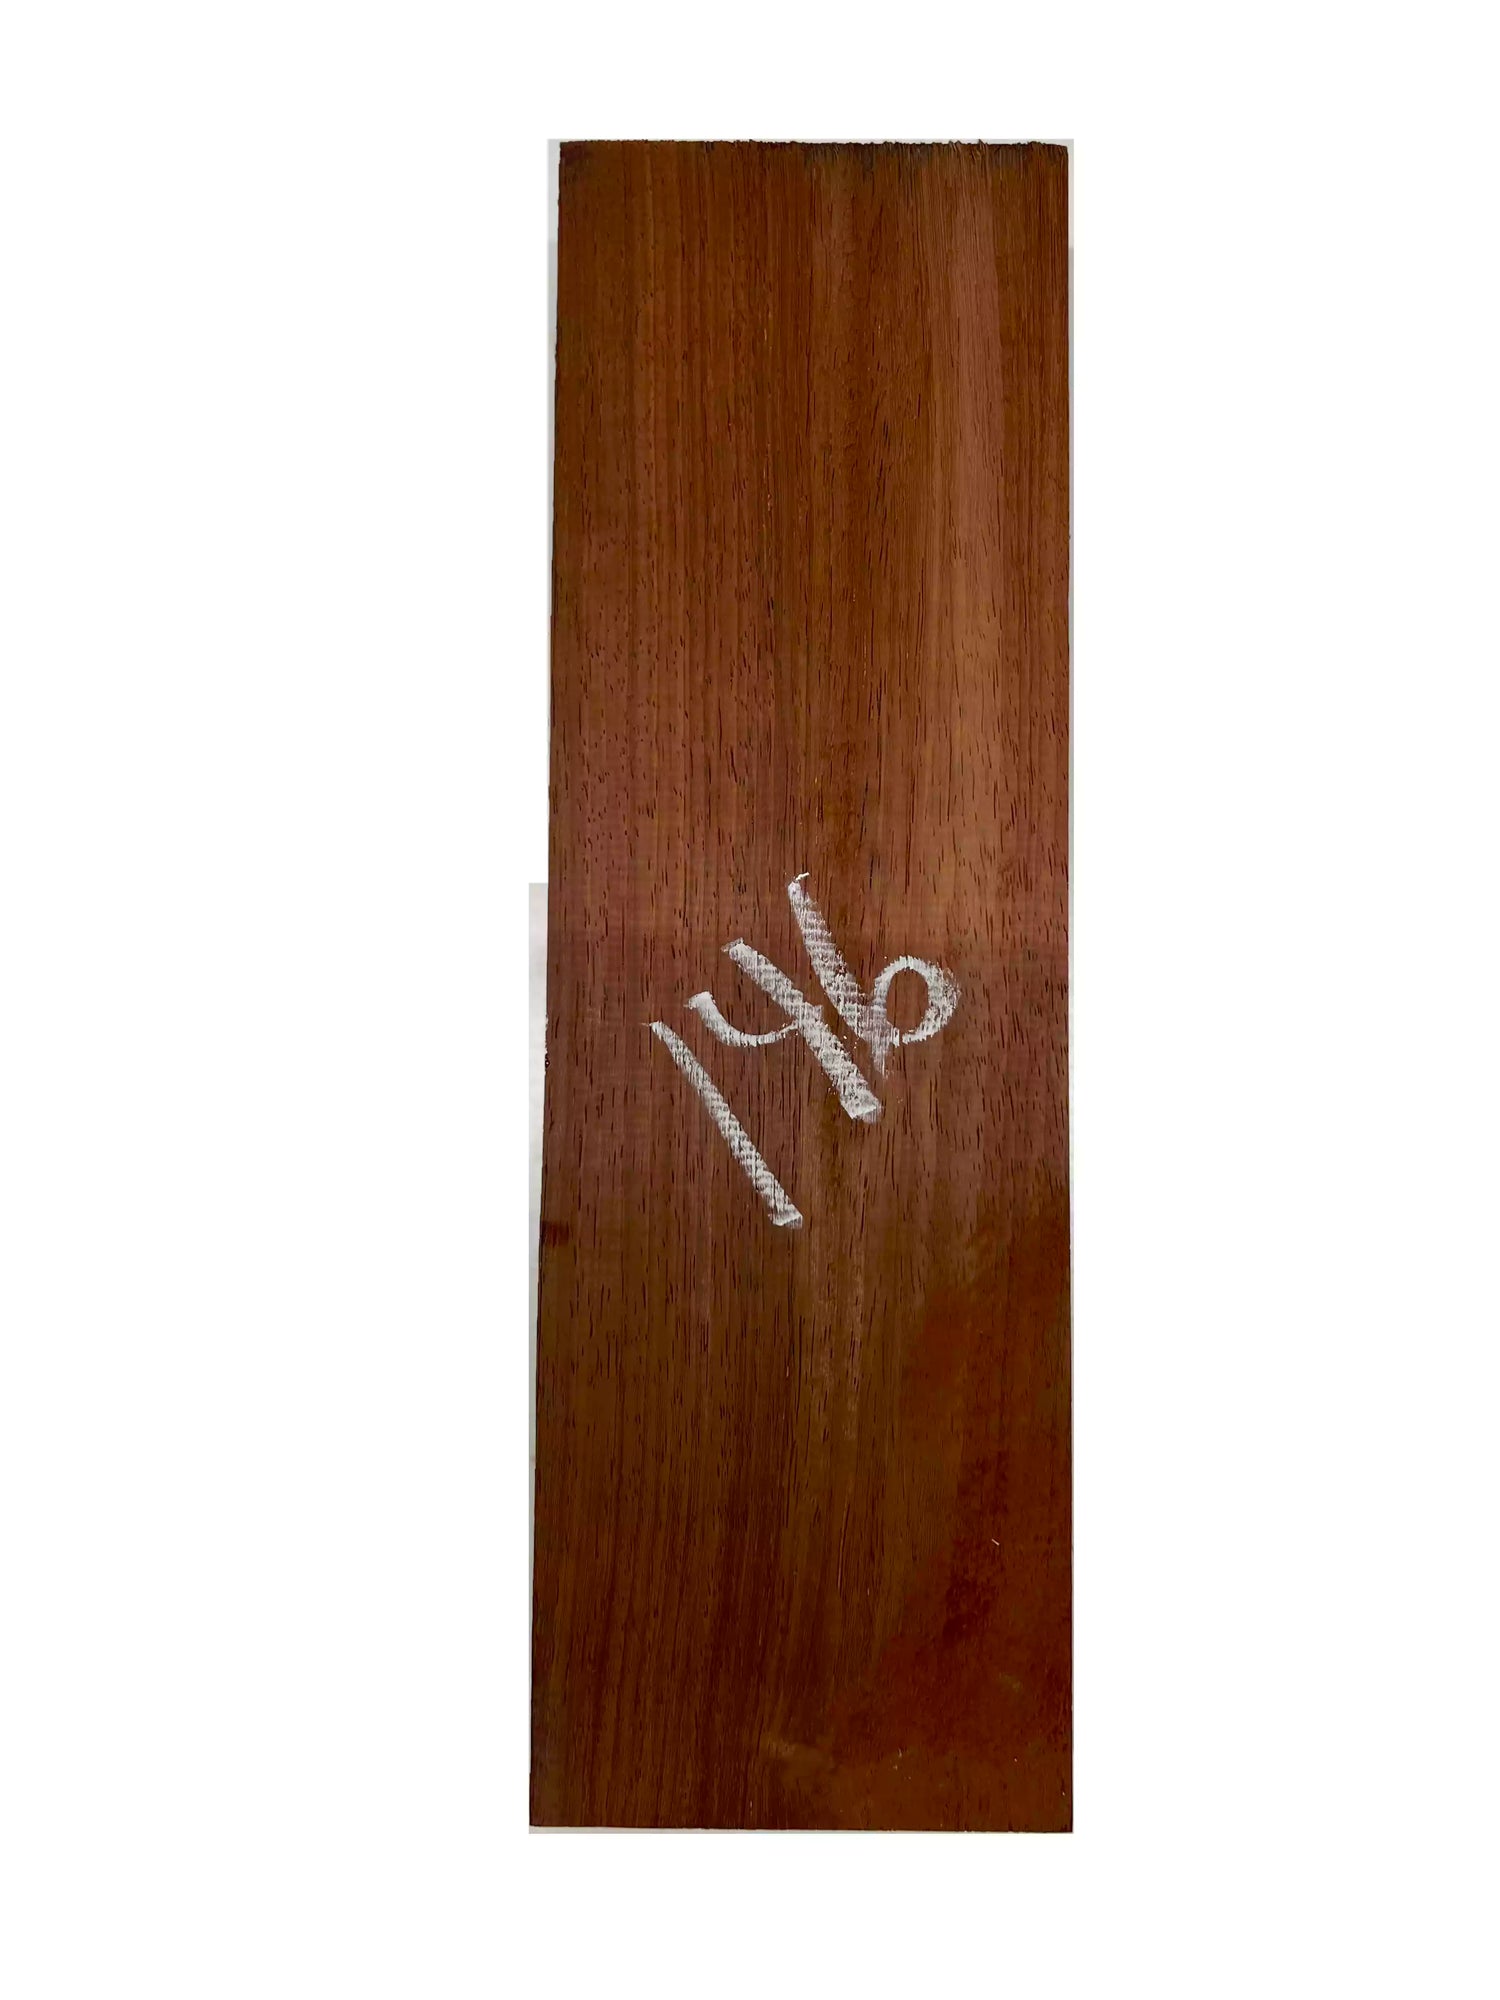 African Padauk Lumber Board Wood Blank 15&quot; x 4-7/8&quot; x 2&quot; 